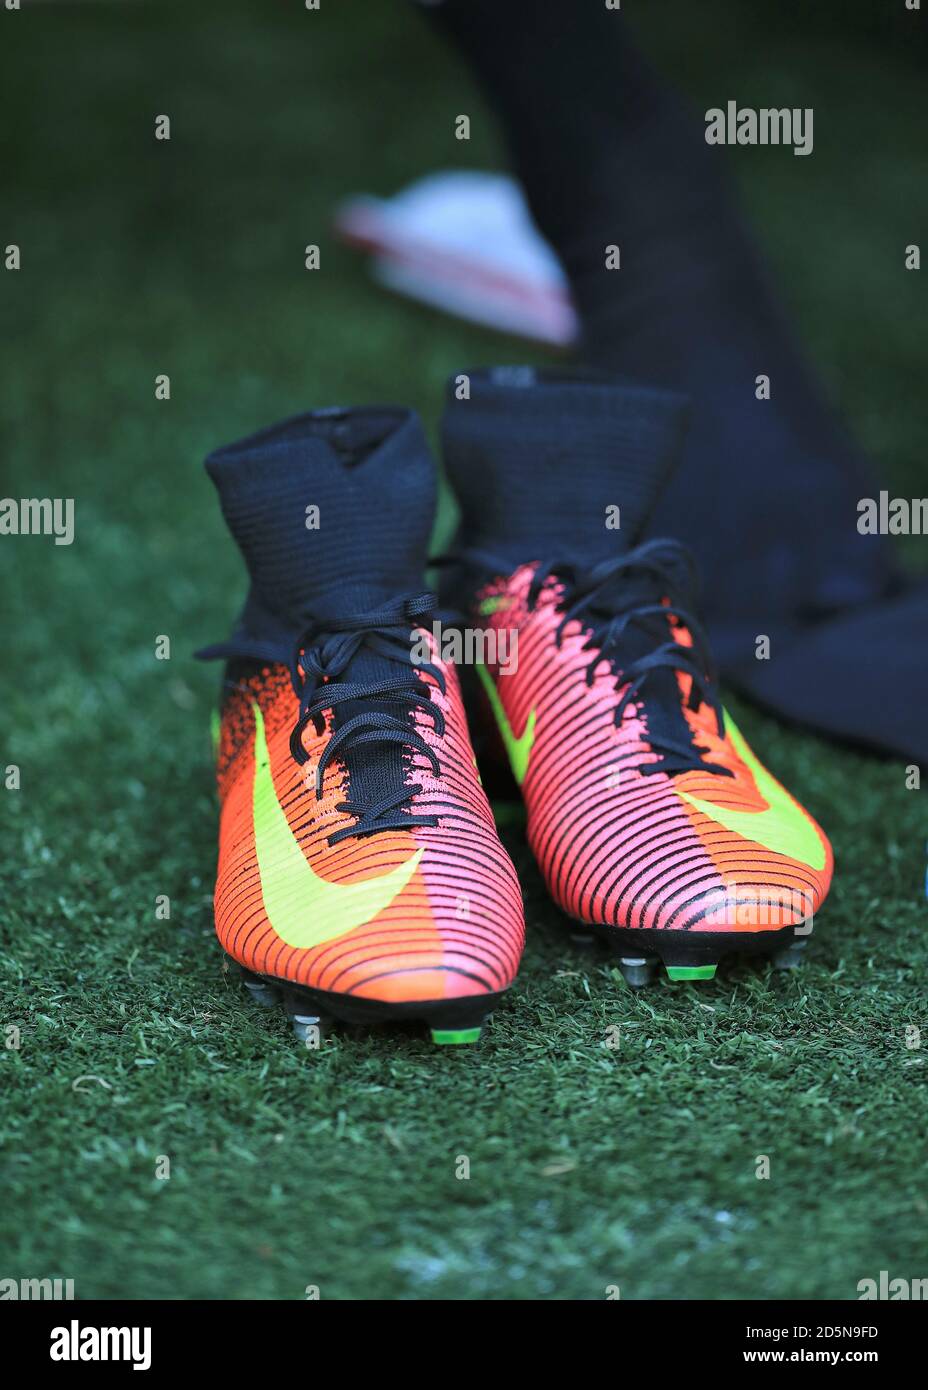 Llamarada Celebridad Señora A pair of orange Nike football boots Stock Photo - Alamy